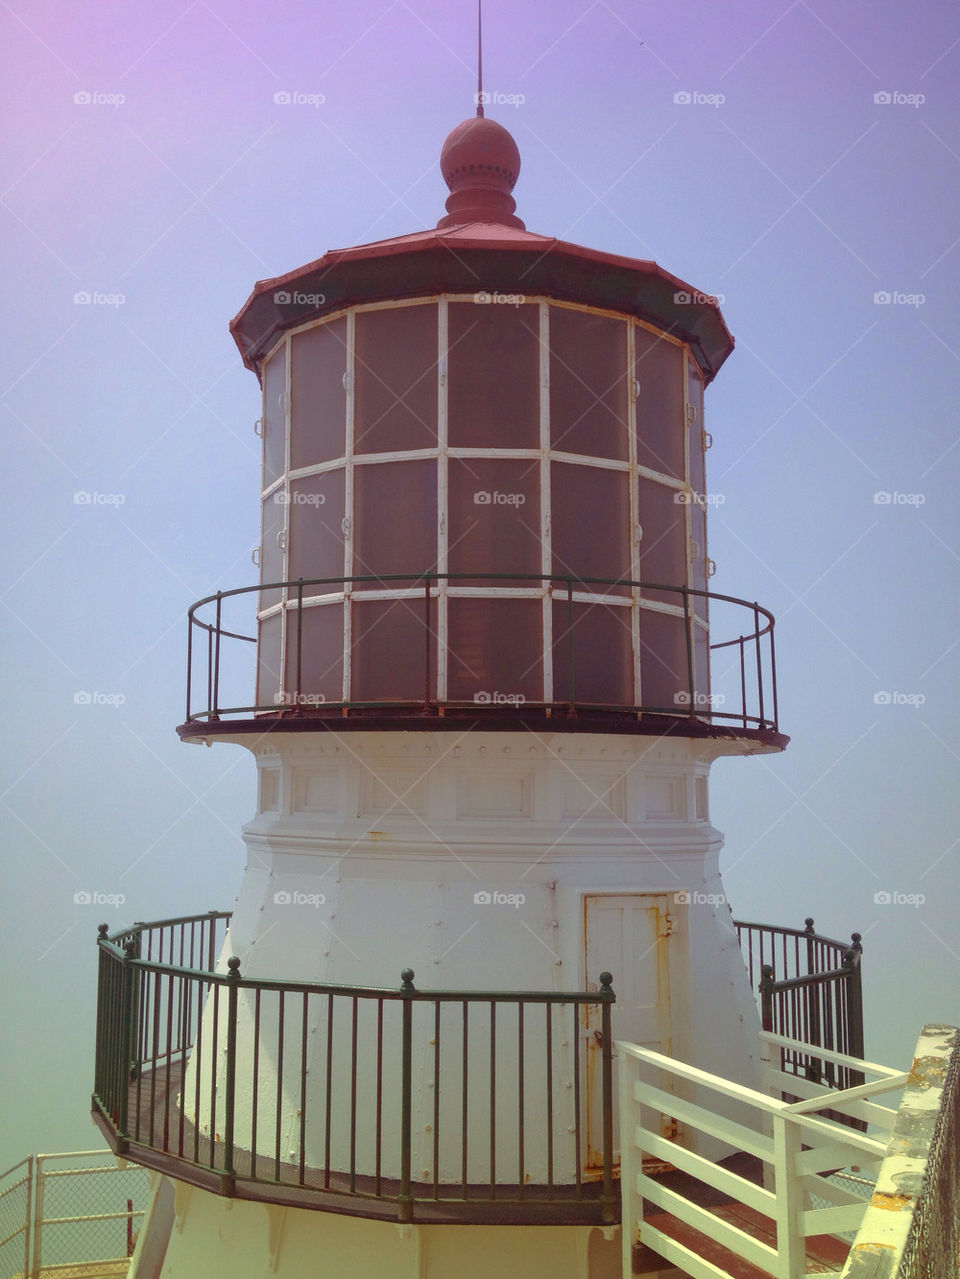 lighthouse pointreyes by kirimoth